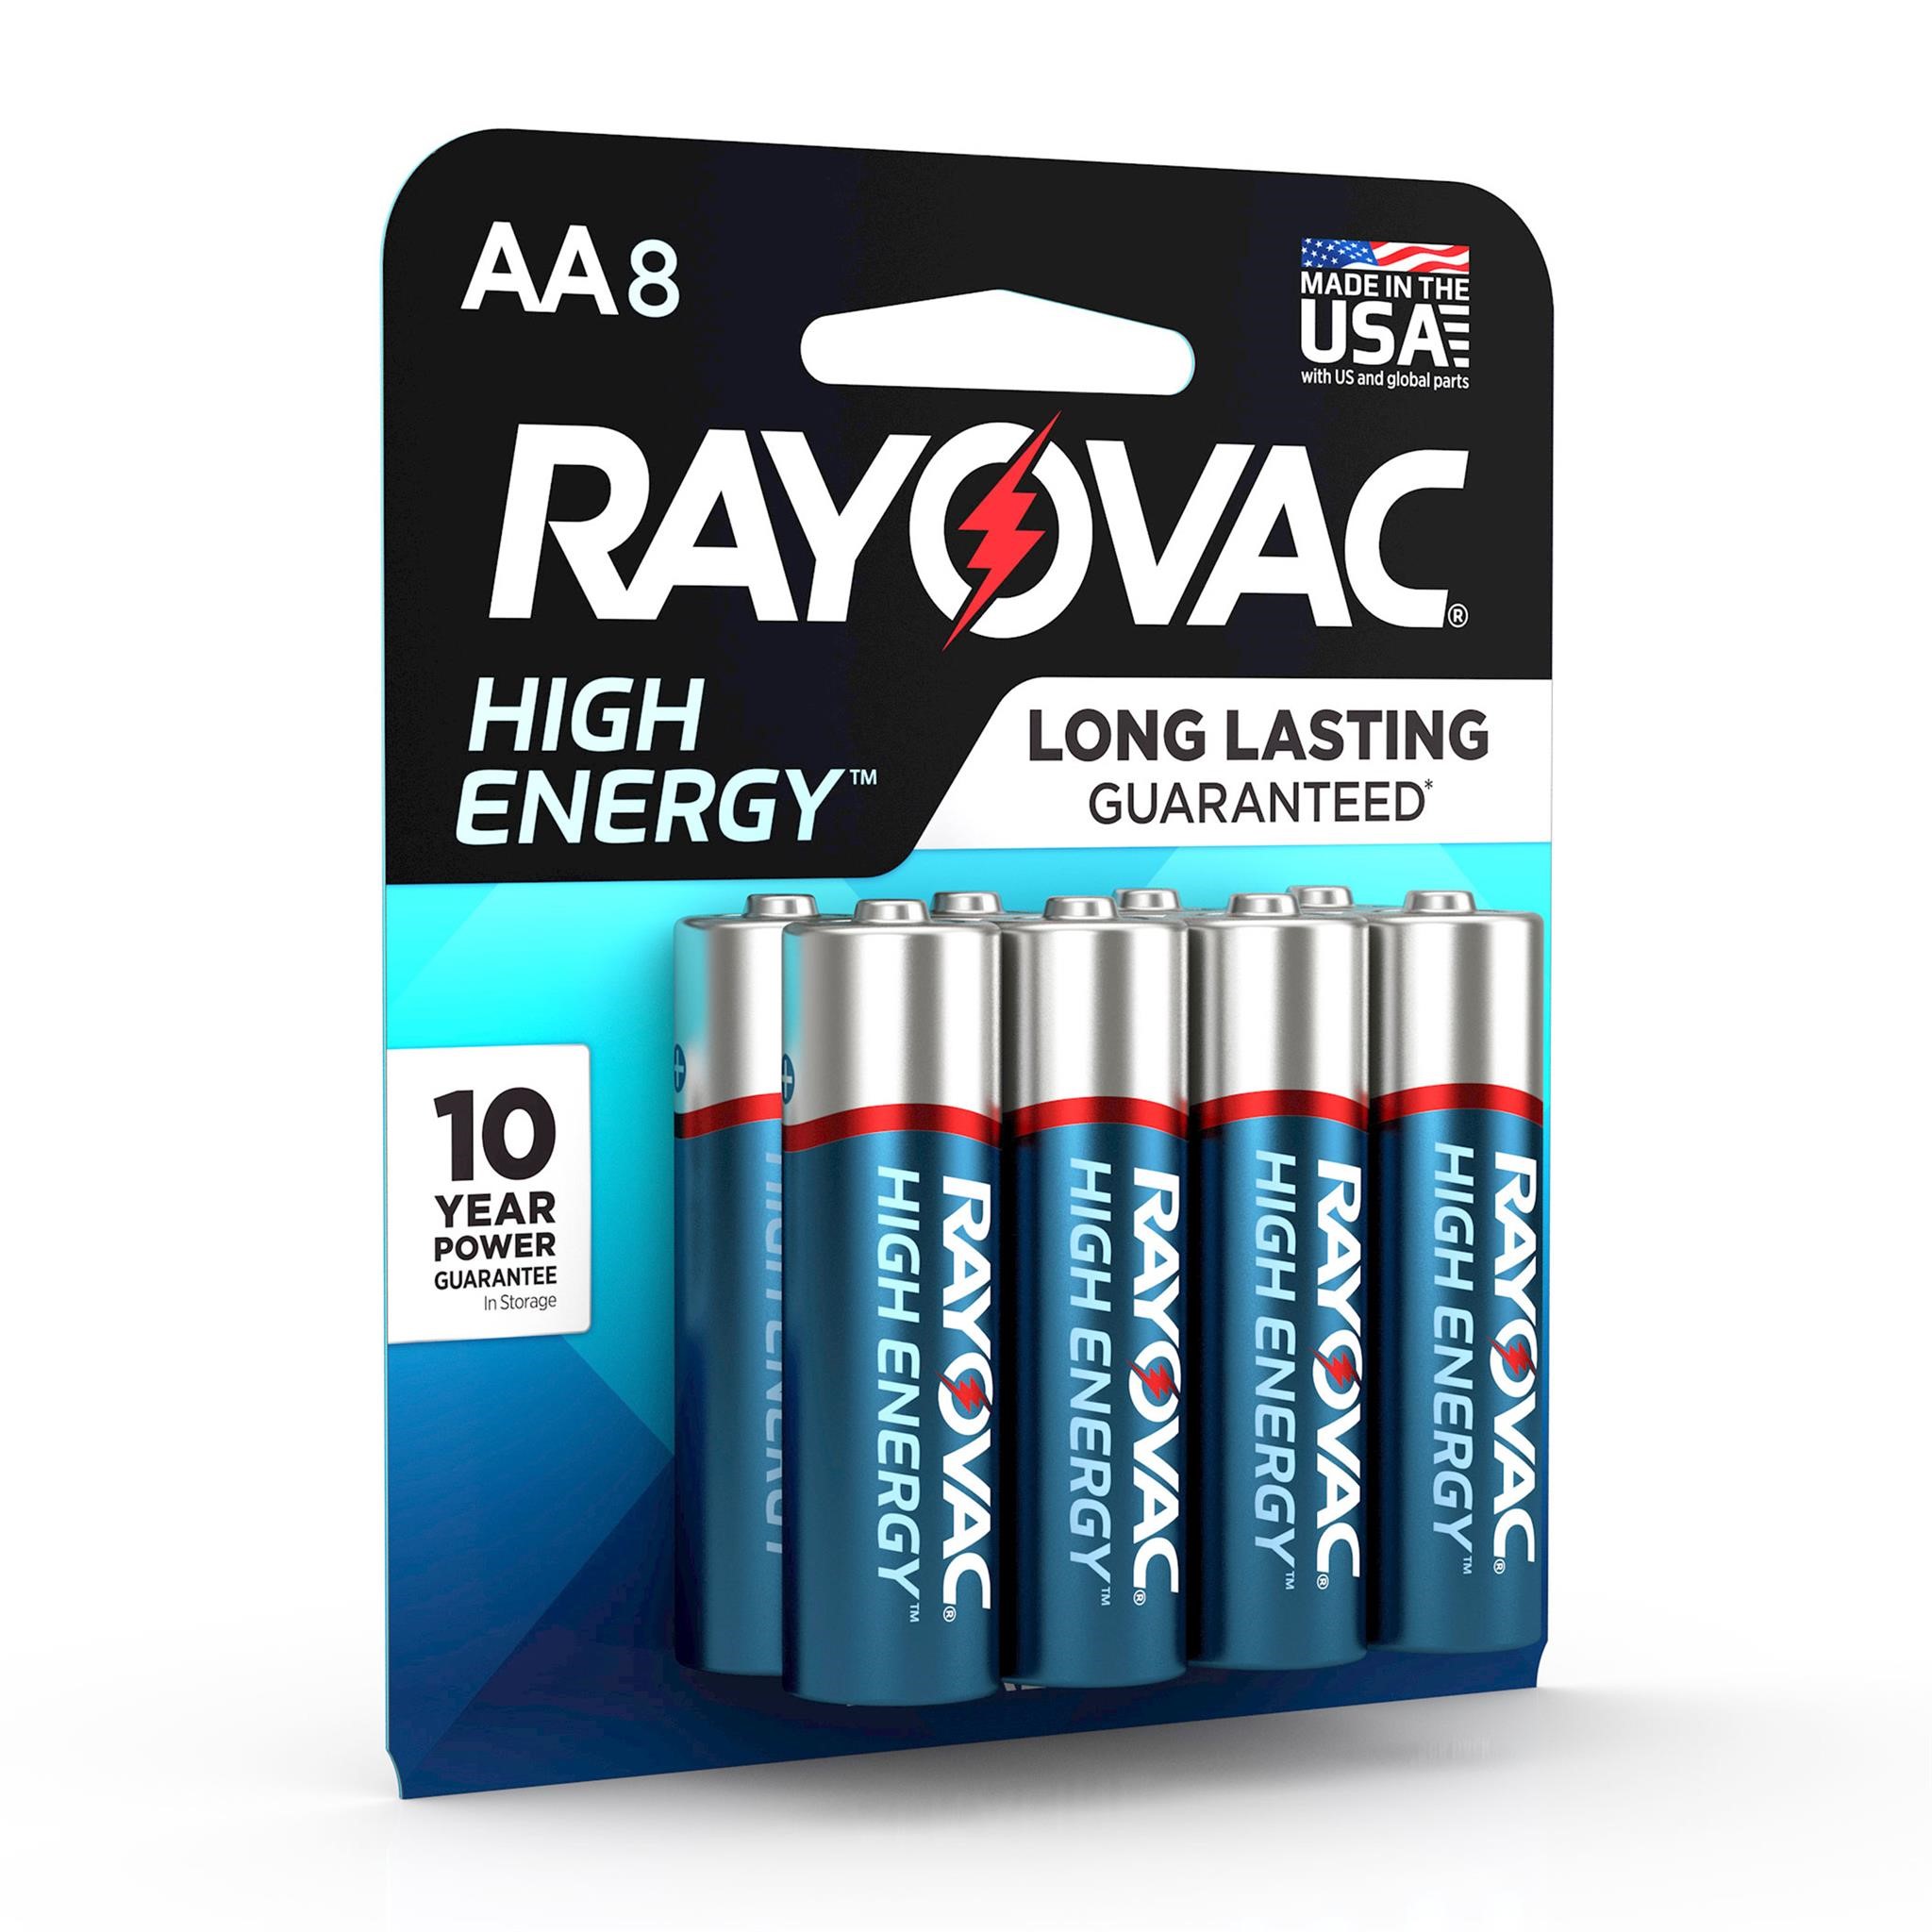 Rayovac Batteries High Energy AA8 24X8EA